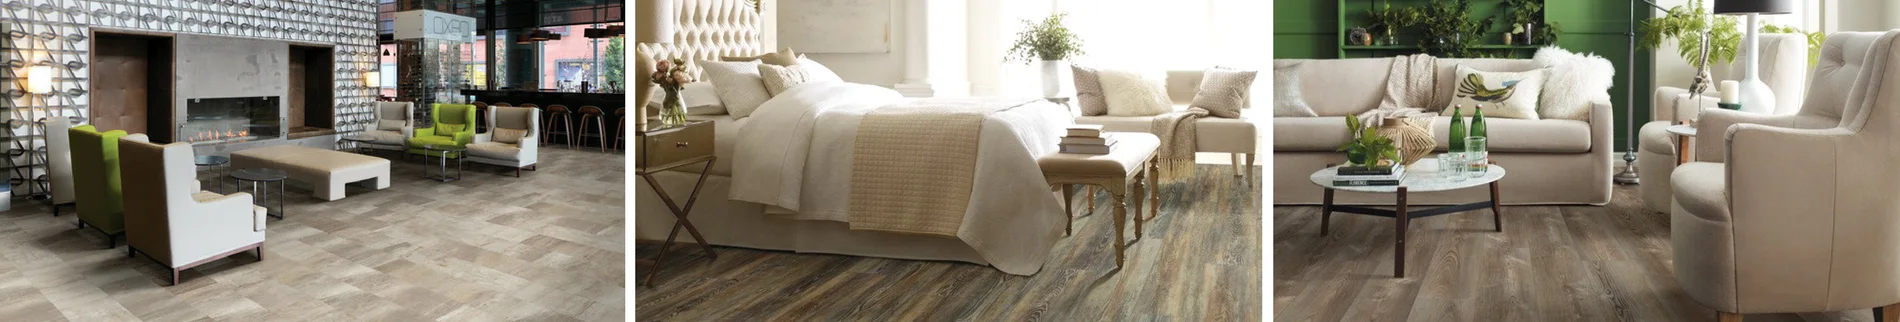 laminate flooring in den with modern furniture